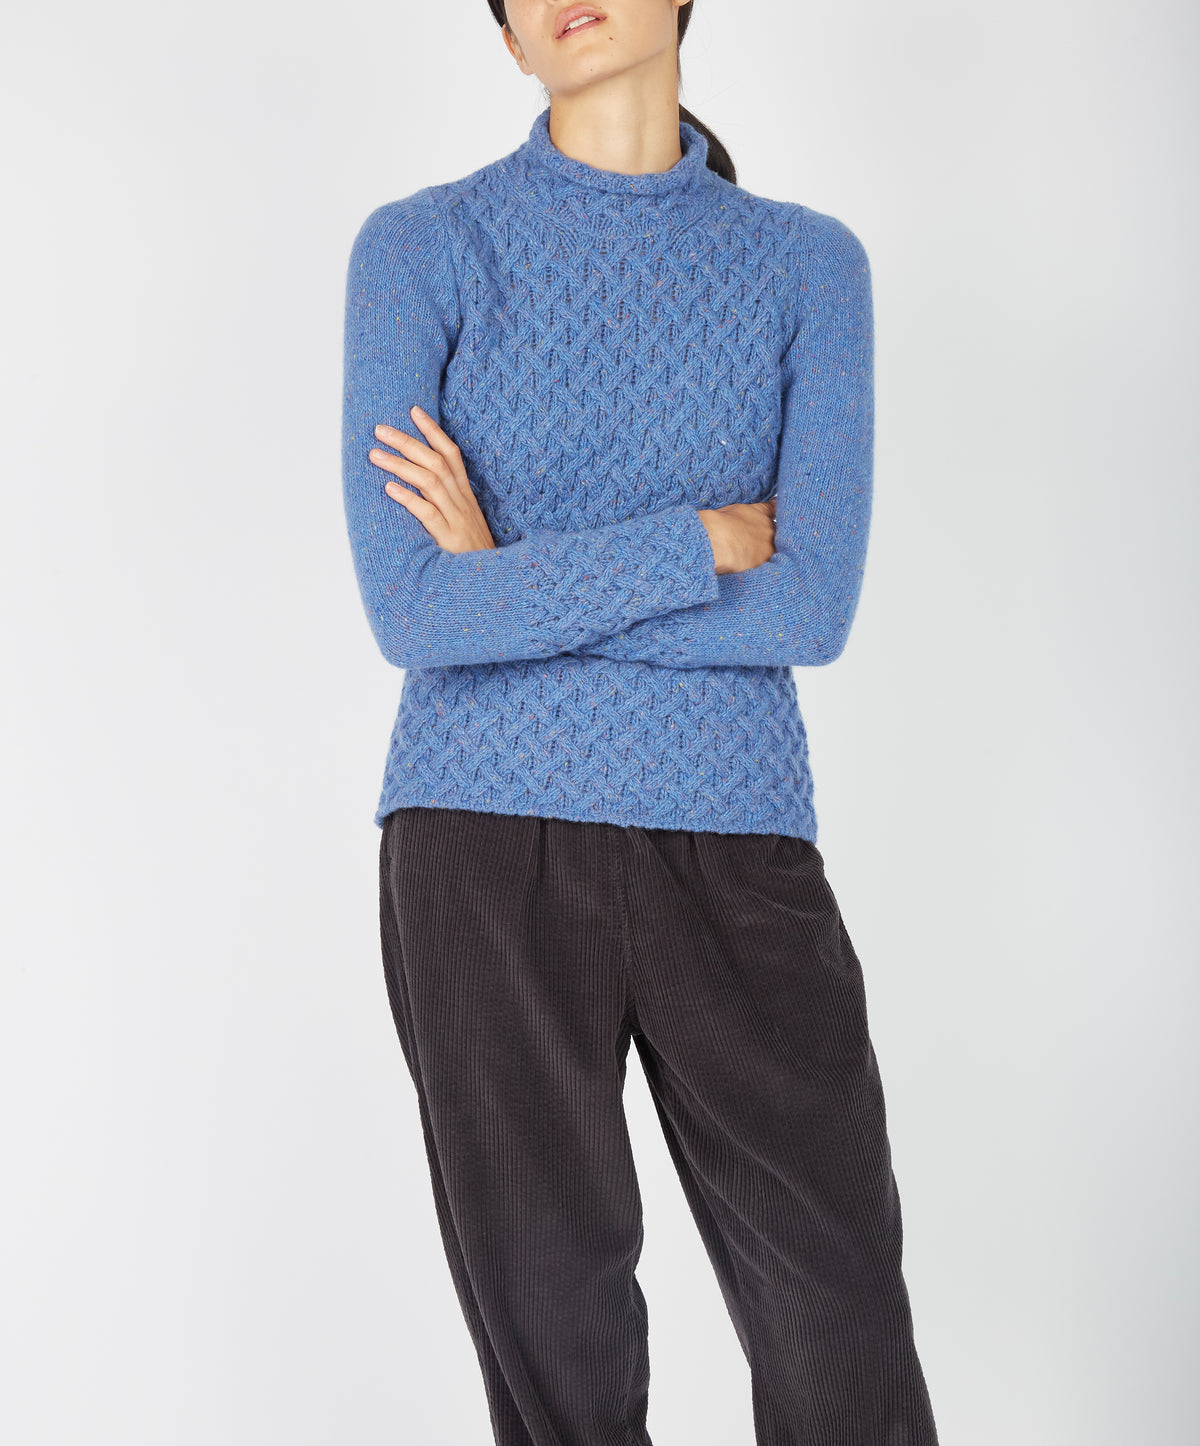 IrelandsEye Knitwear Trellis Sweater Marina